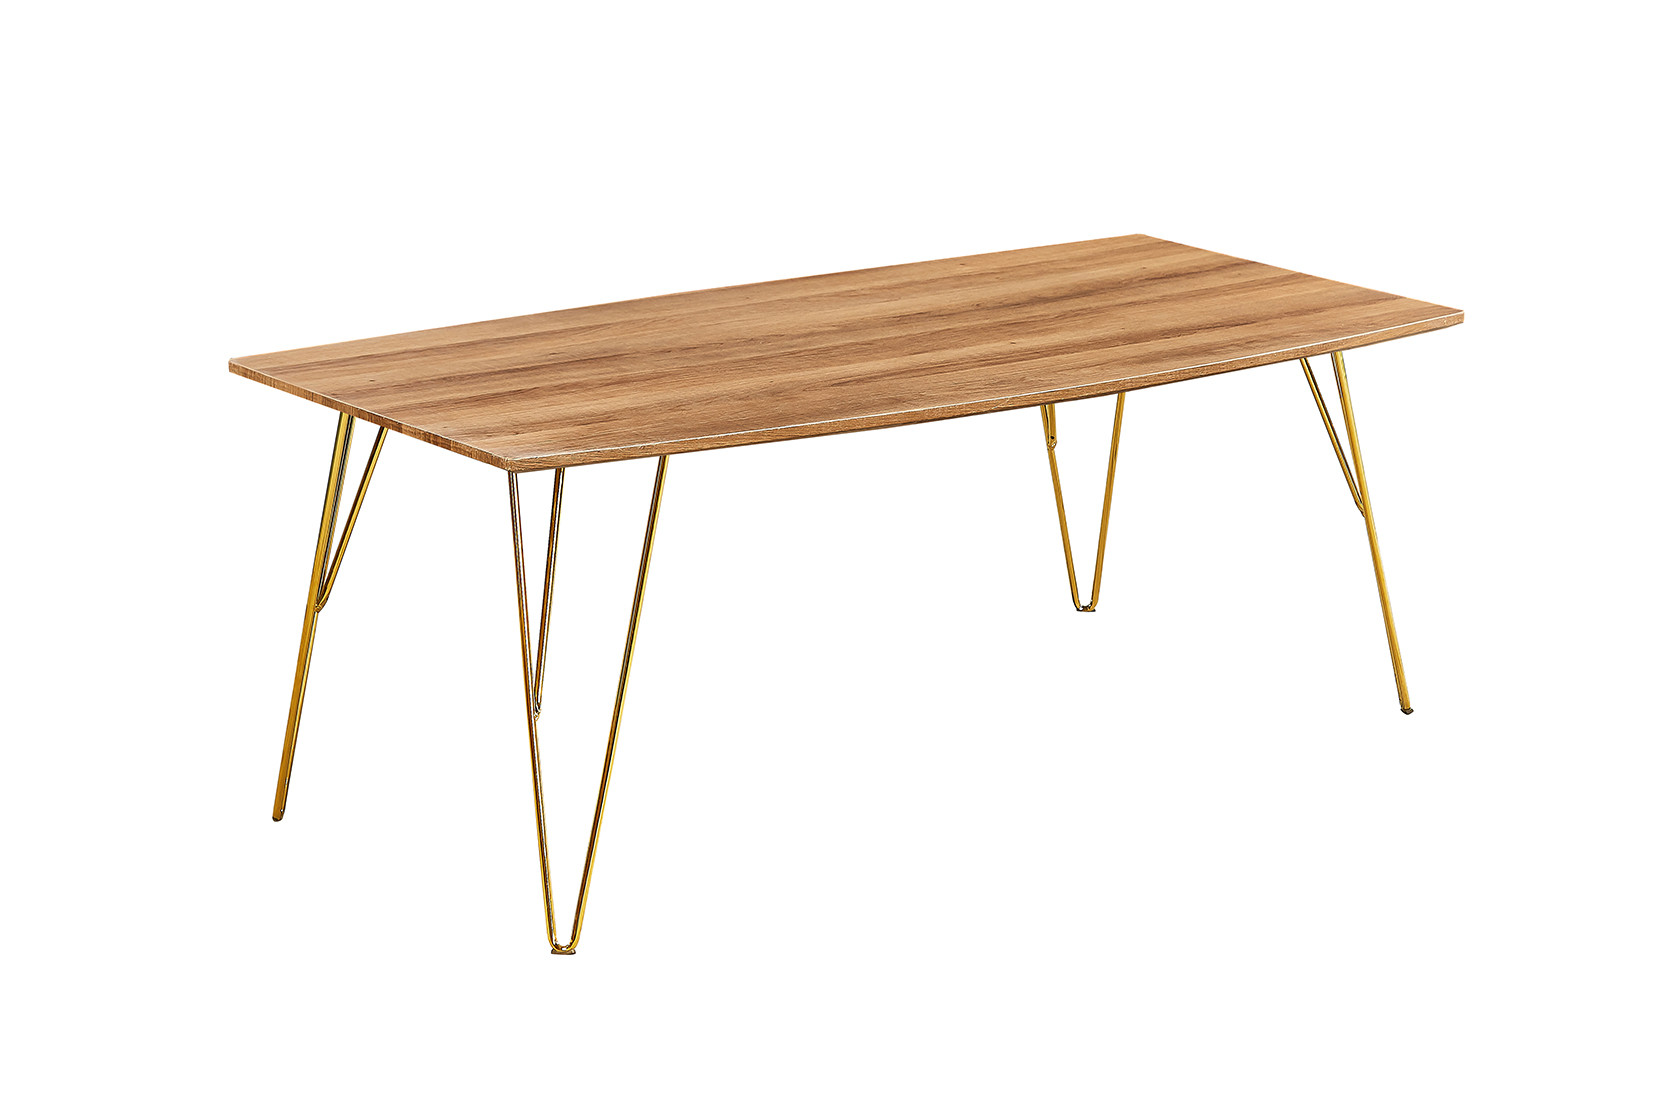 Fusion Coffee Table Wood